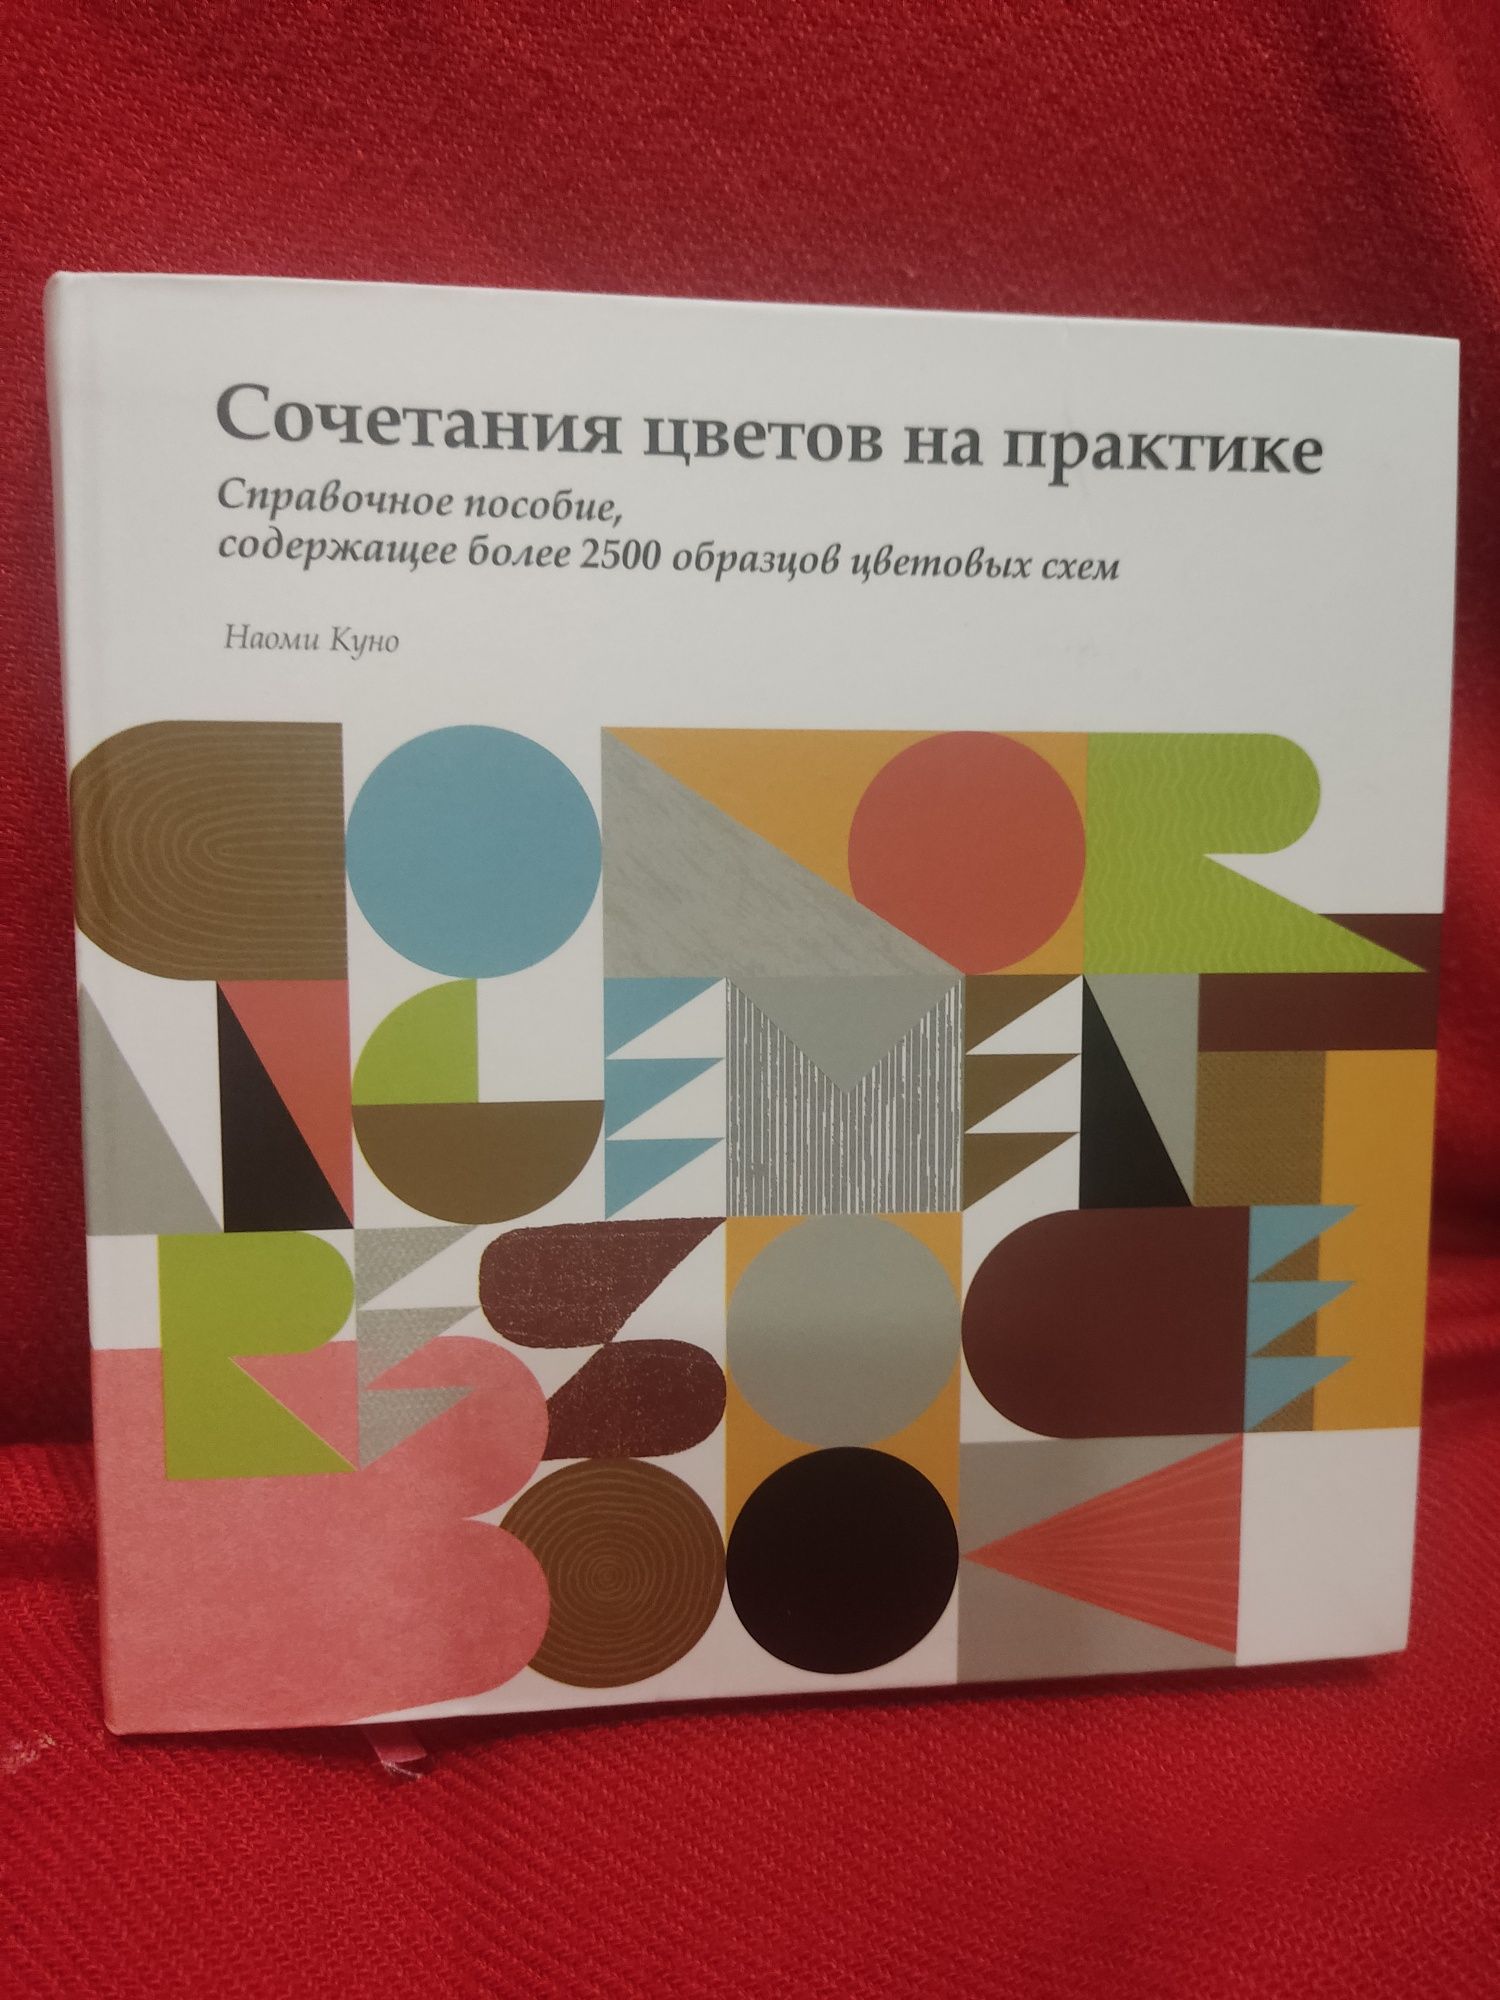 Книга "Сочетание цветов на практике" Наоми Куно російською мовою